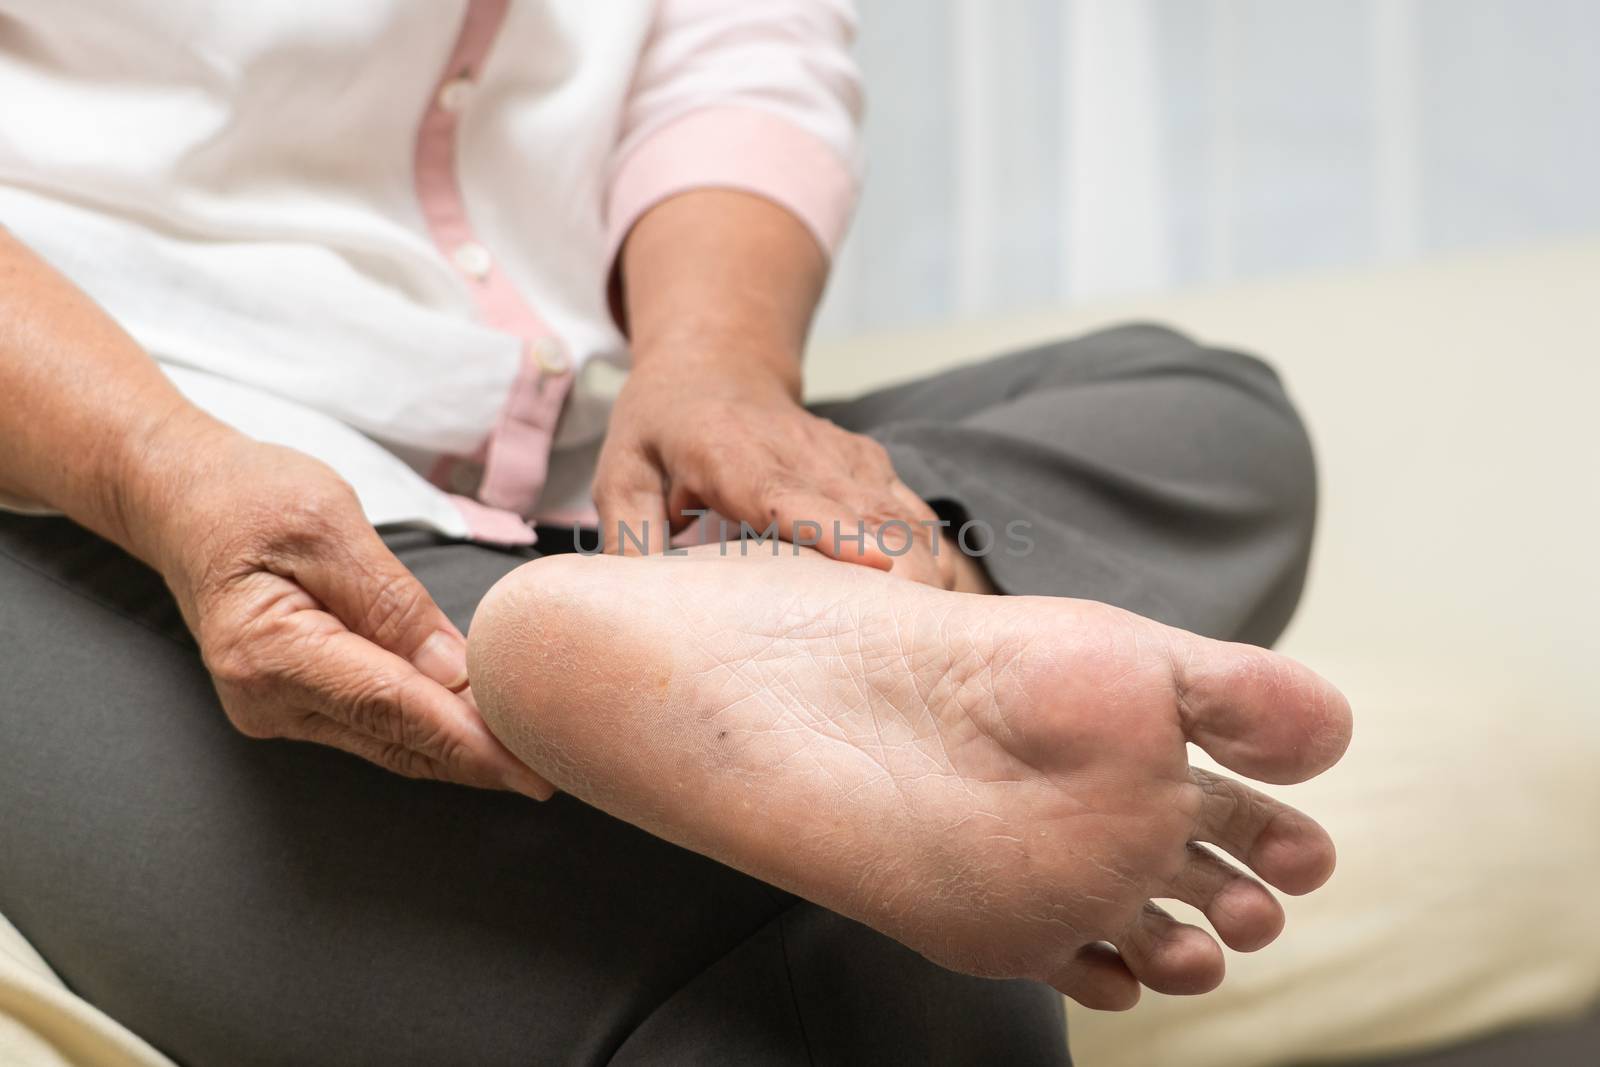 dry skin and cornea on senior woman foot by psodaz